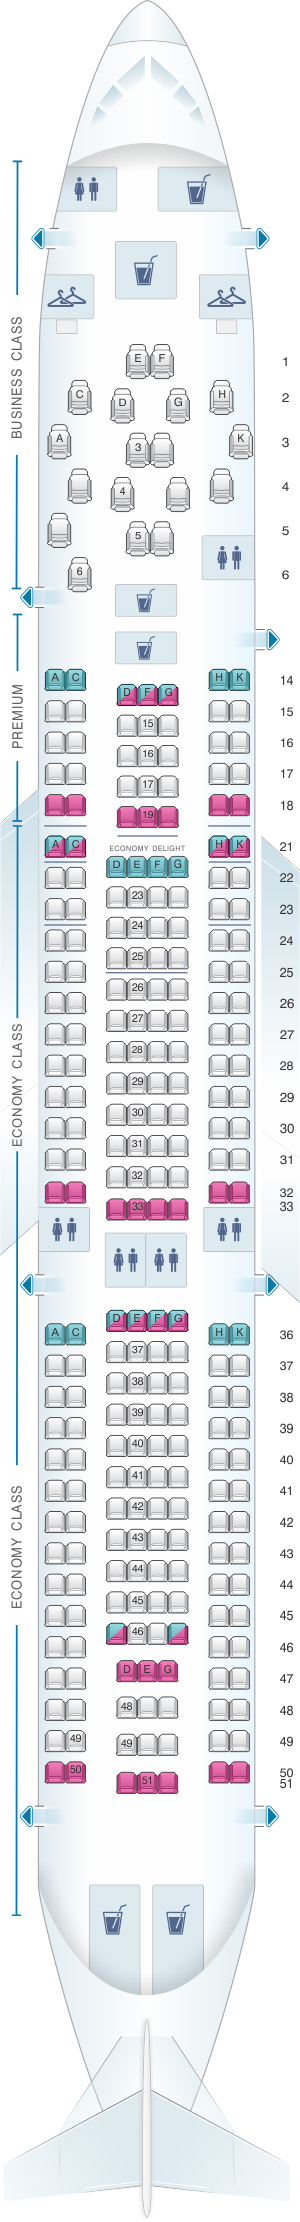 Atlantic Flight Seating Chart